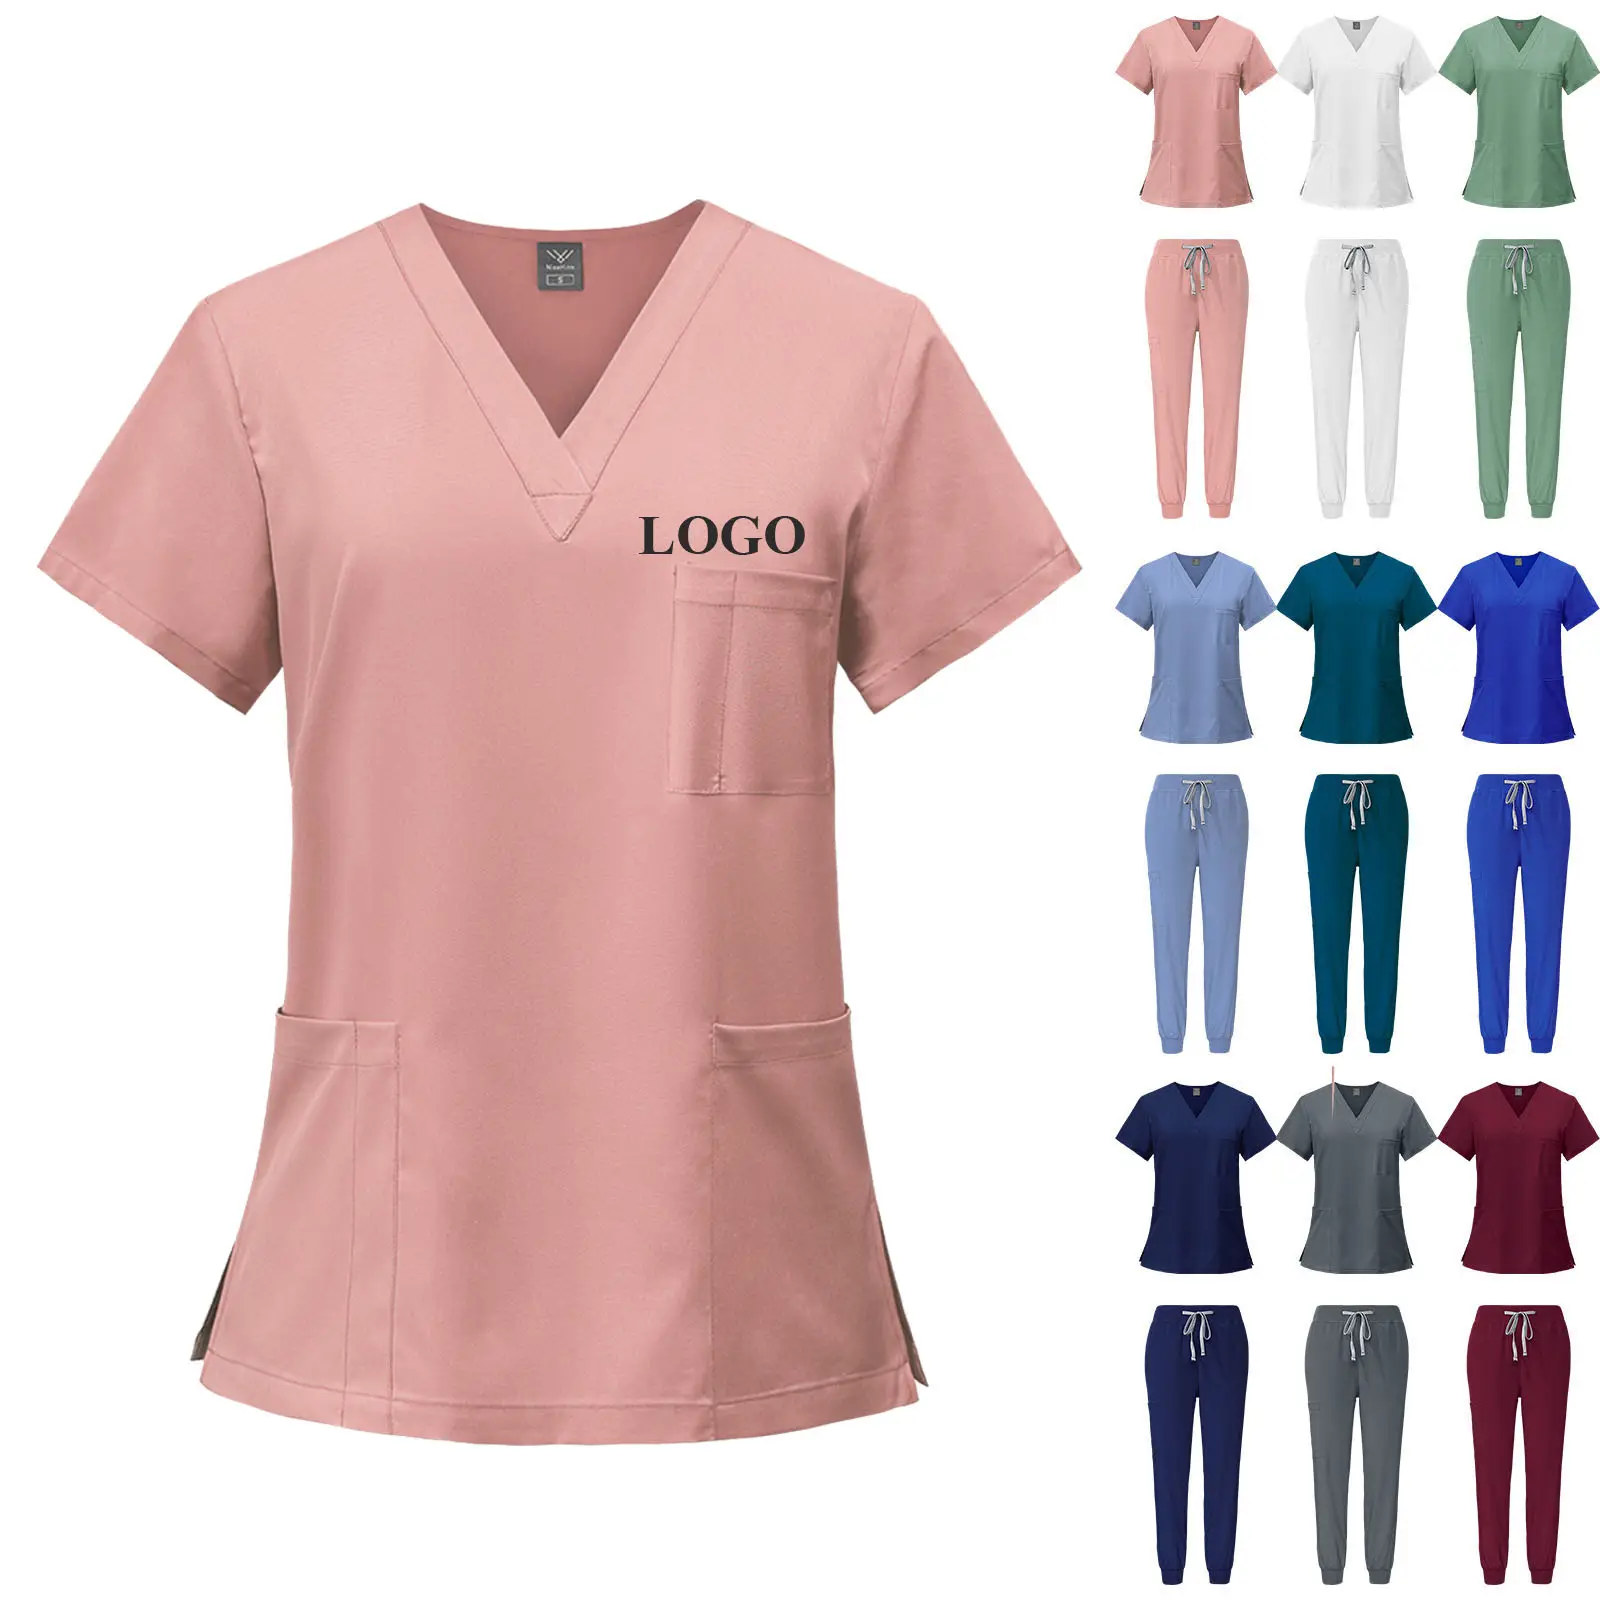 Fashion hospital uniforms nurse beauty dental salon work clothes custom LOGO uniform medical scrubs sets for men women